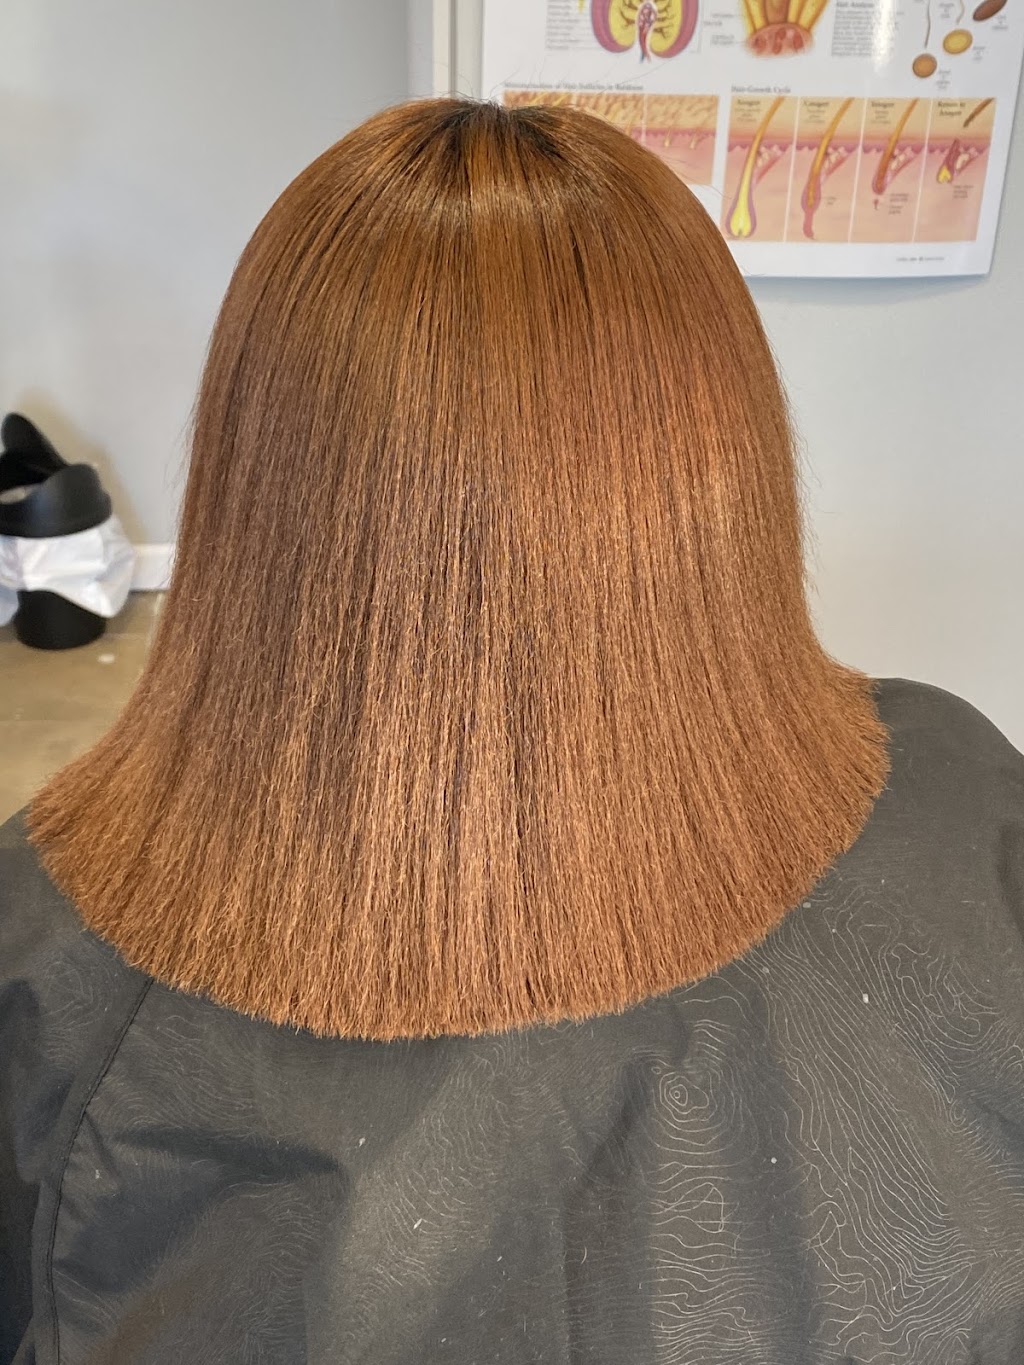 Glorious Hair Restoration Salon | 194 Lafayette Ave, Edison, NJ 08837, USA | Phone: (732) 515-9600